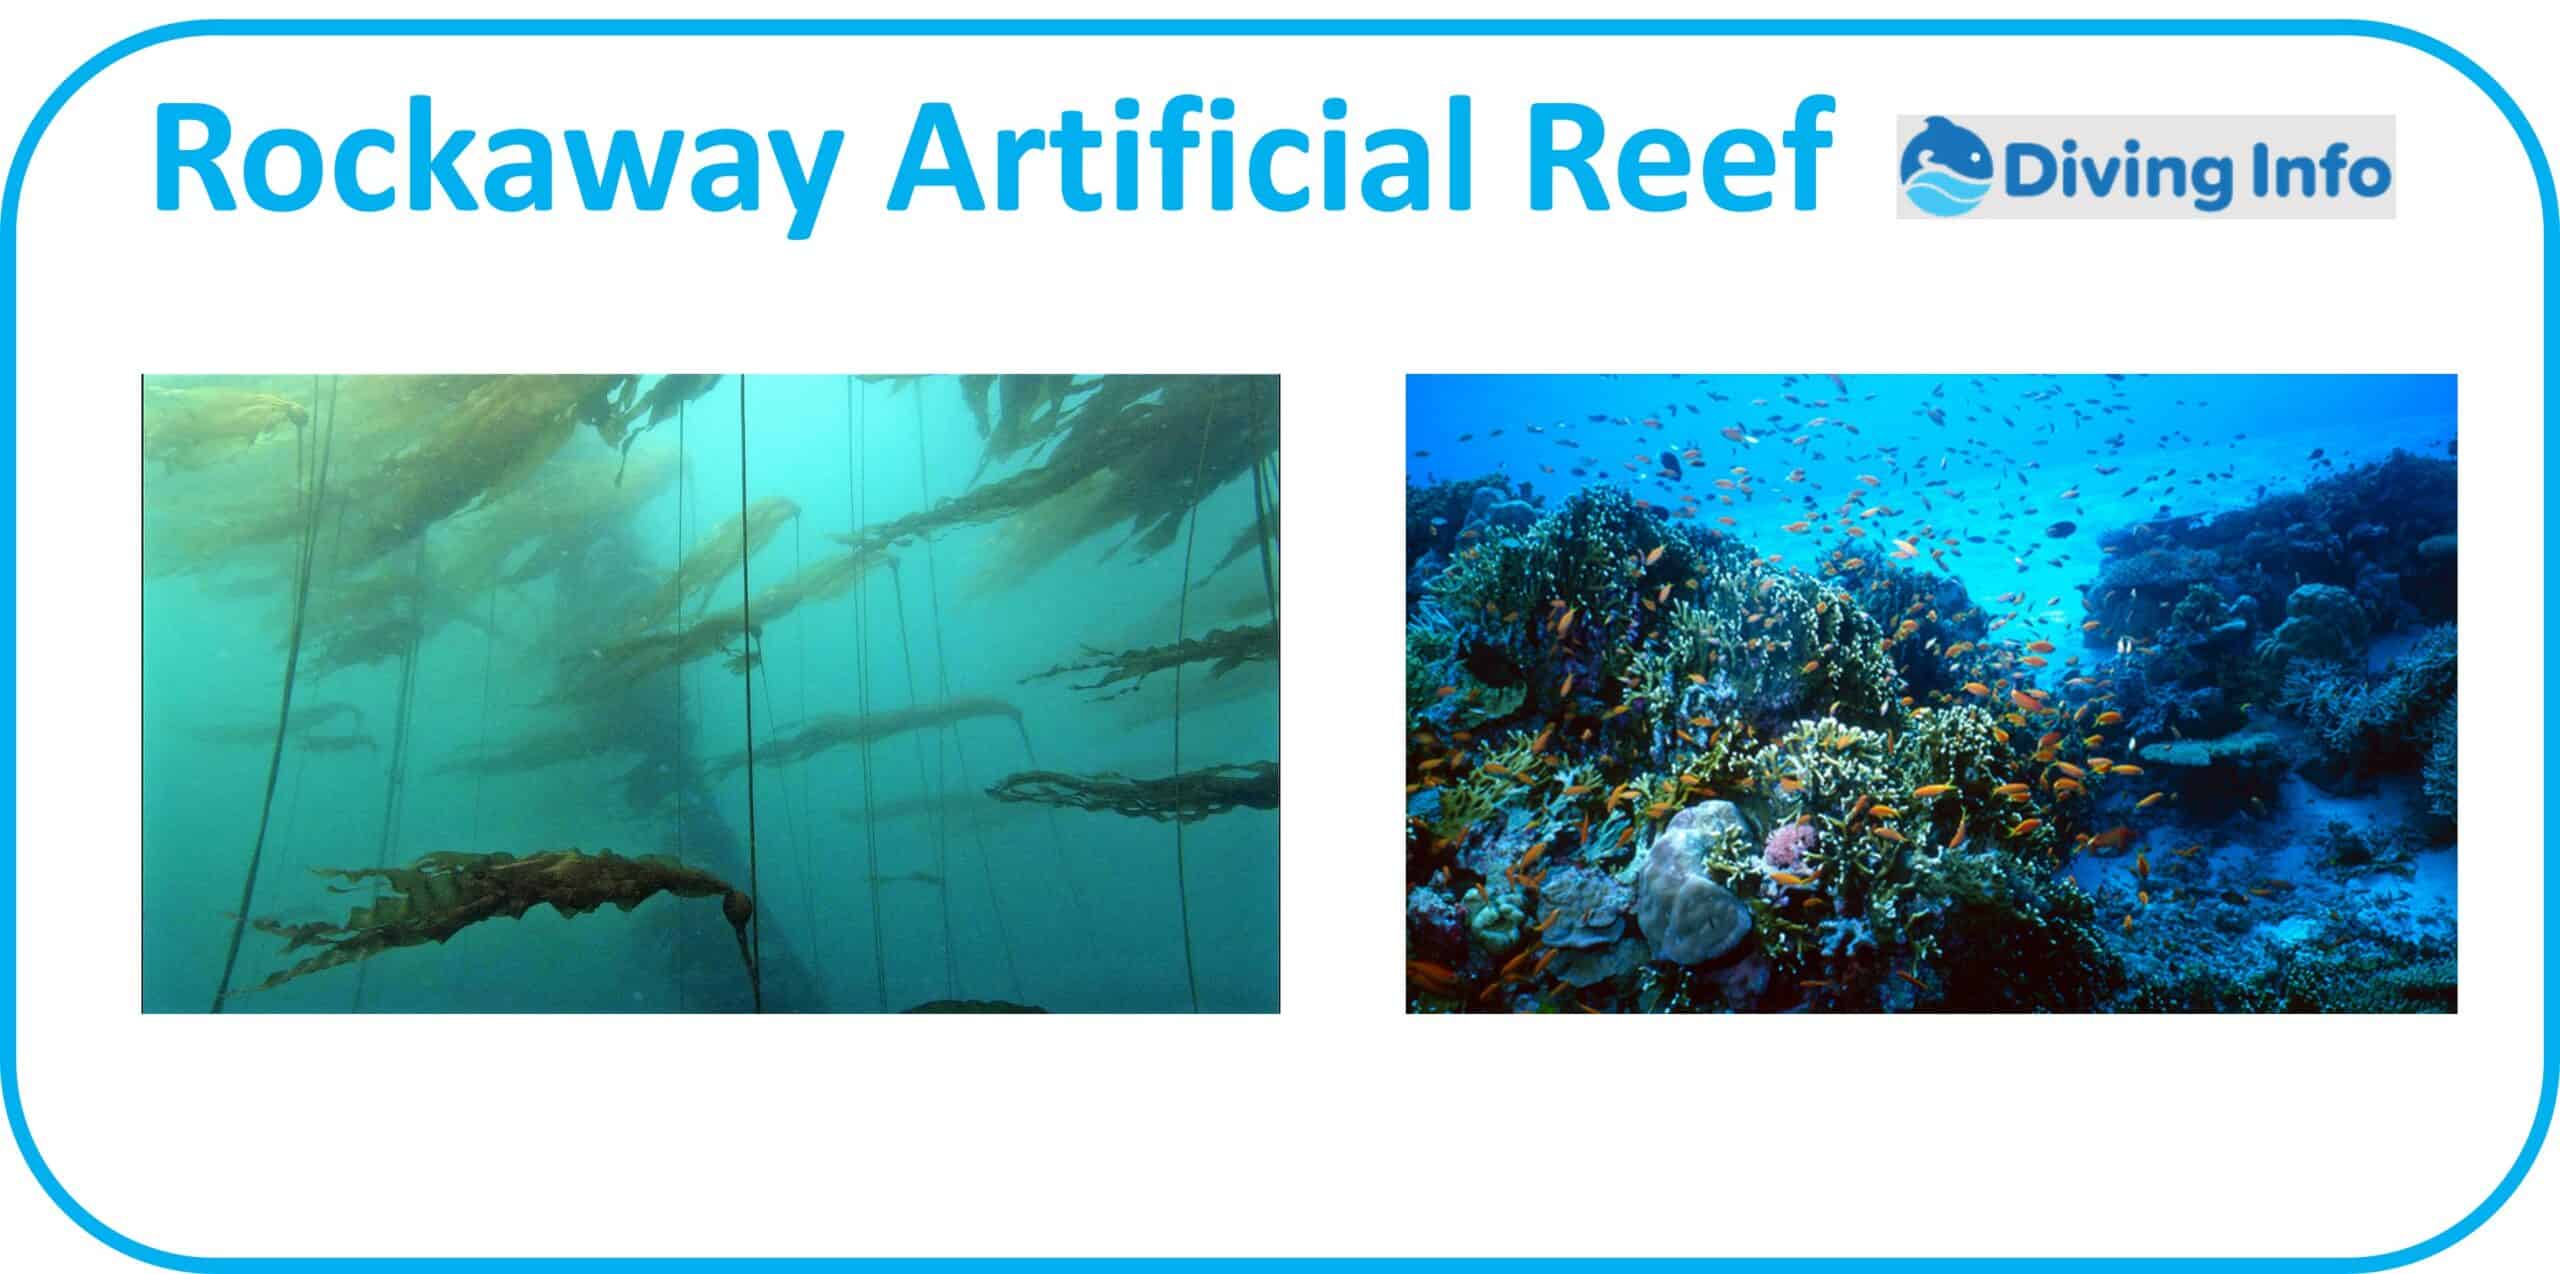 Rockaway Artificial Reef